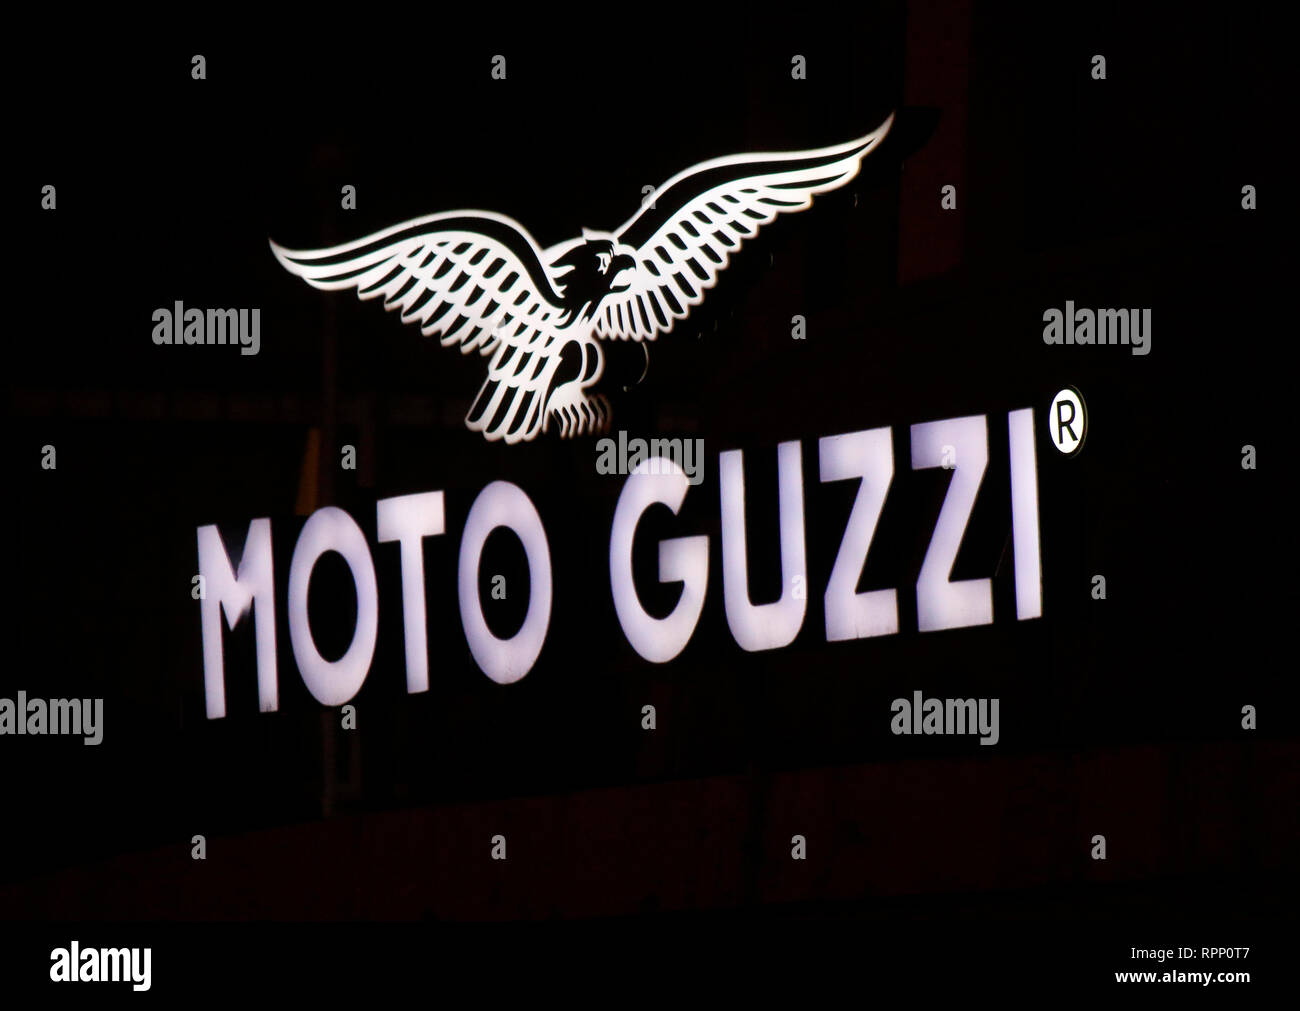 moto guzzi logo vector